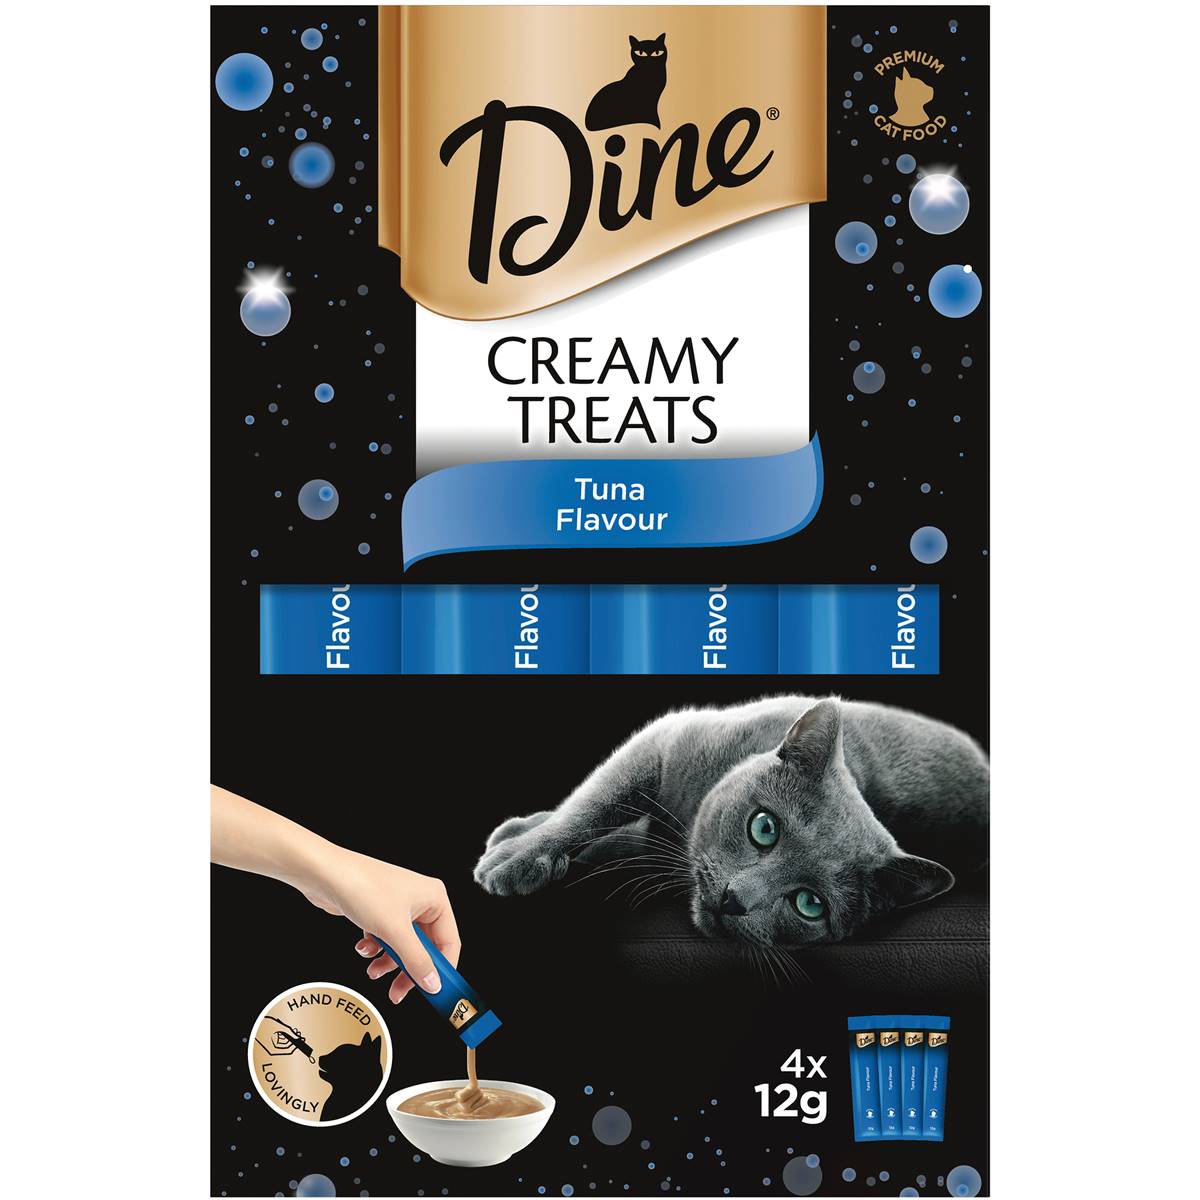 Dine Creamy Treats Tuna Flavour Cat Treat 4x12g